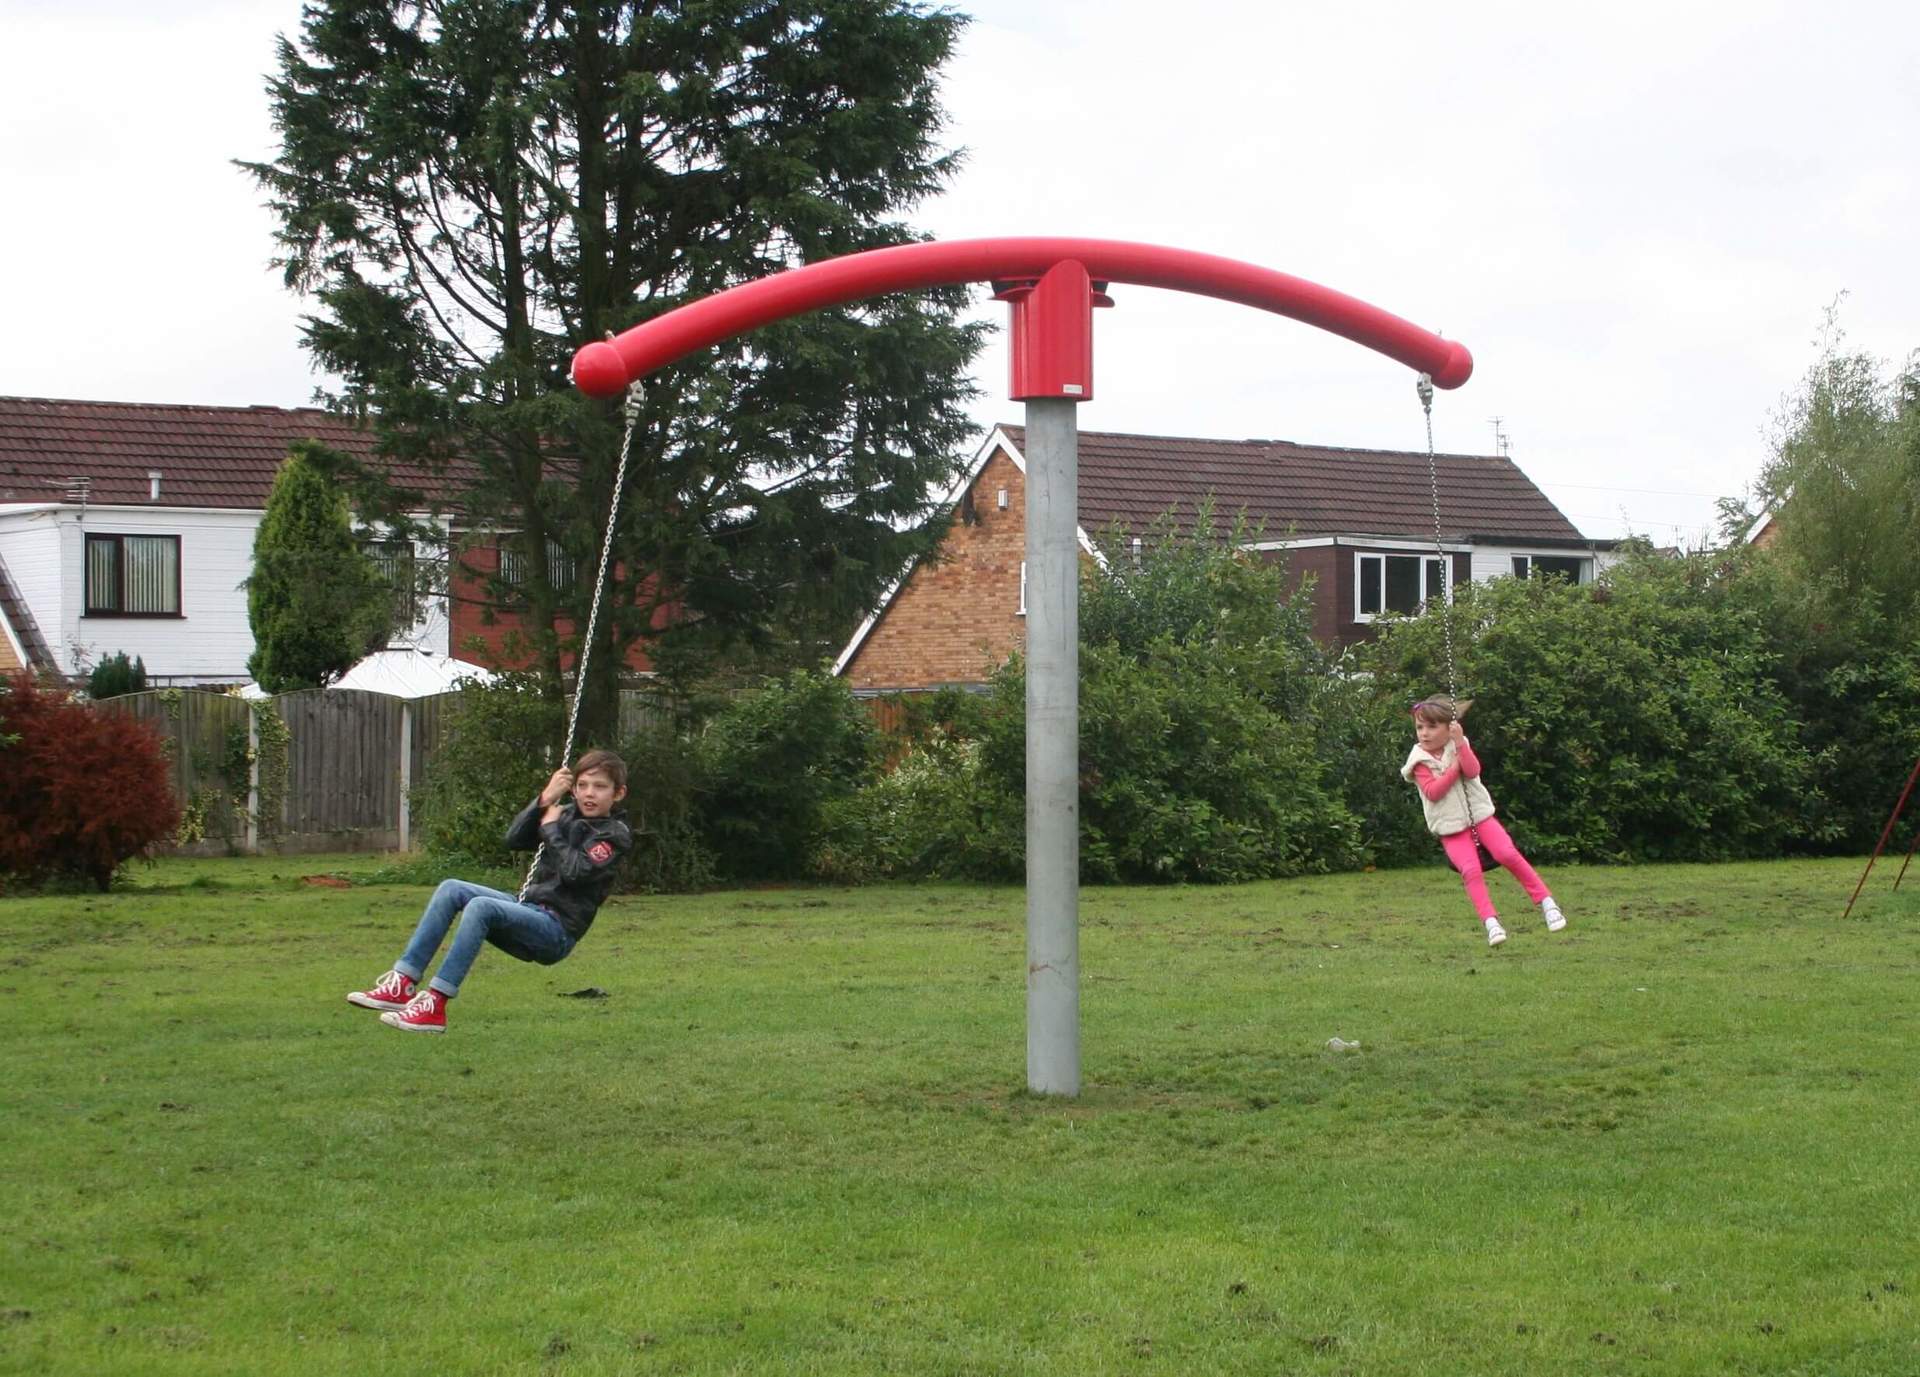 Playground Swing on Grass